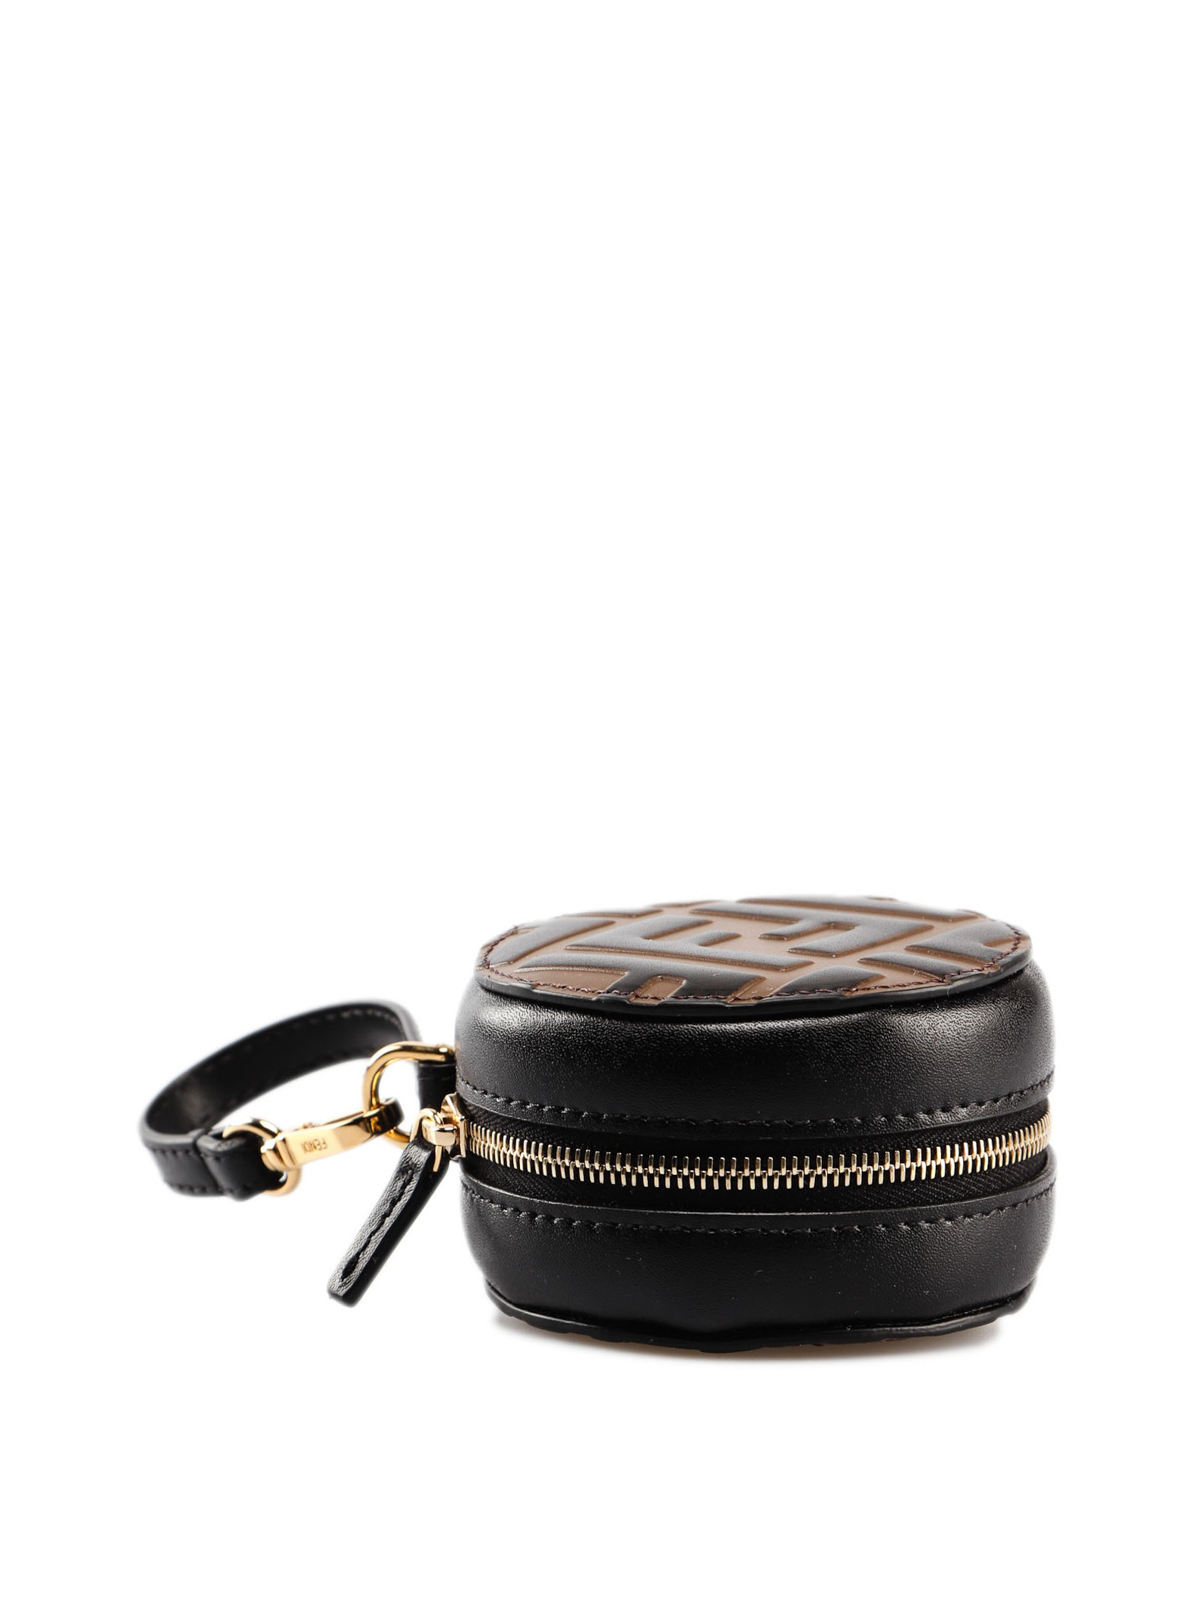 Fendi Nano Baguette Charm Bag With Chain Brown/ Cream GHW